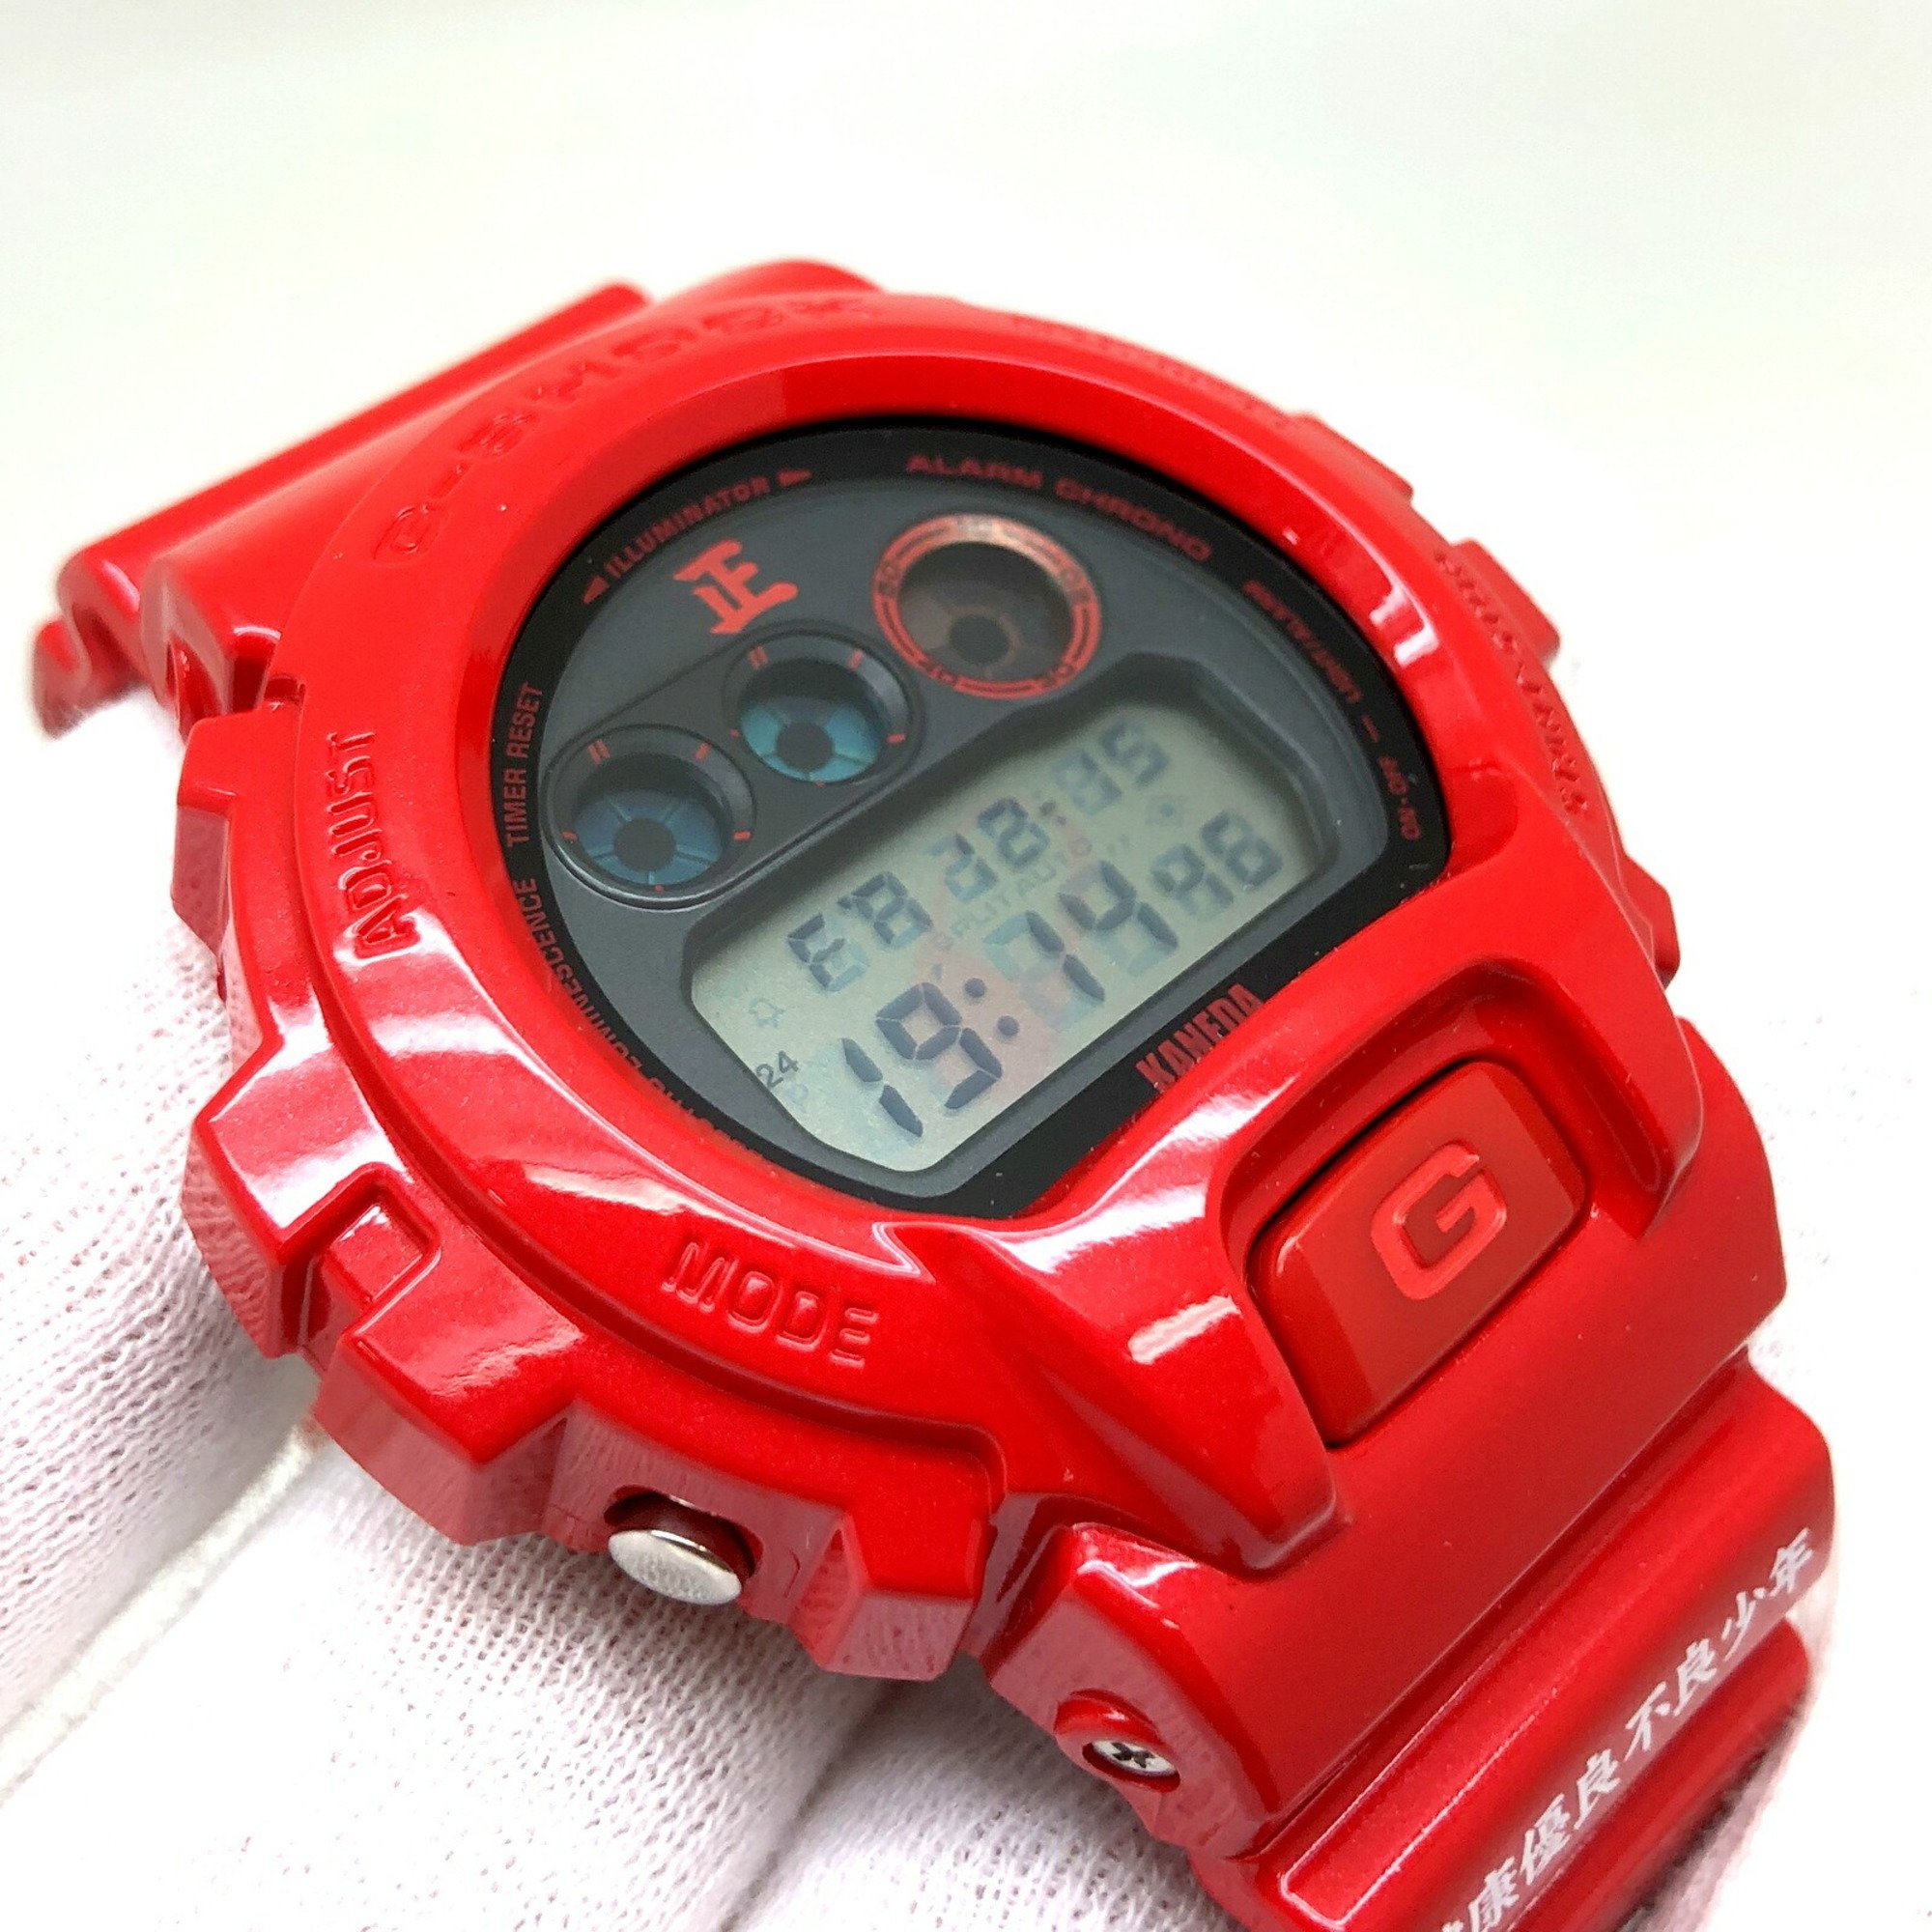 CASIO G-SHOCK Watch DW-6900FS AKIRA KANEDA Shotaro Kaneda Collaboration 30th Anniversary Limited to 1,000 Red Digital Quartz ITYHZF5F7CIA